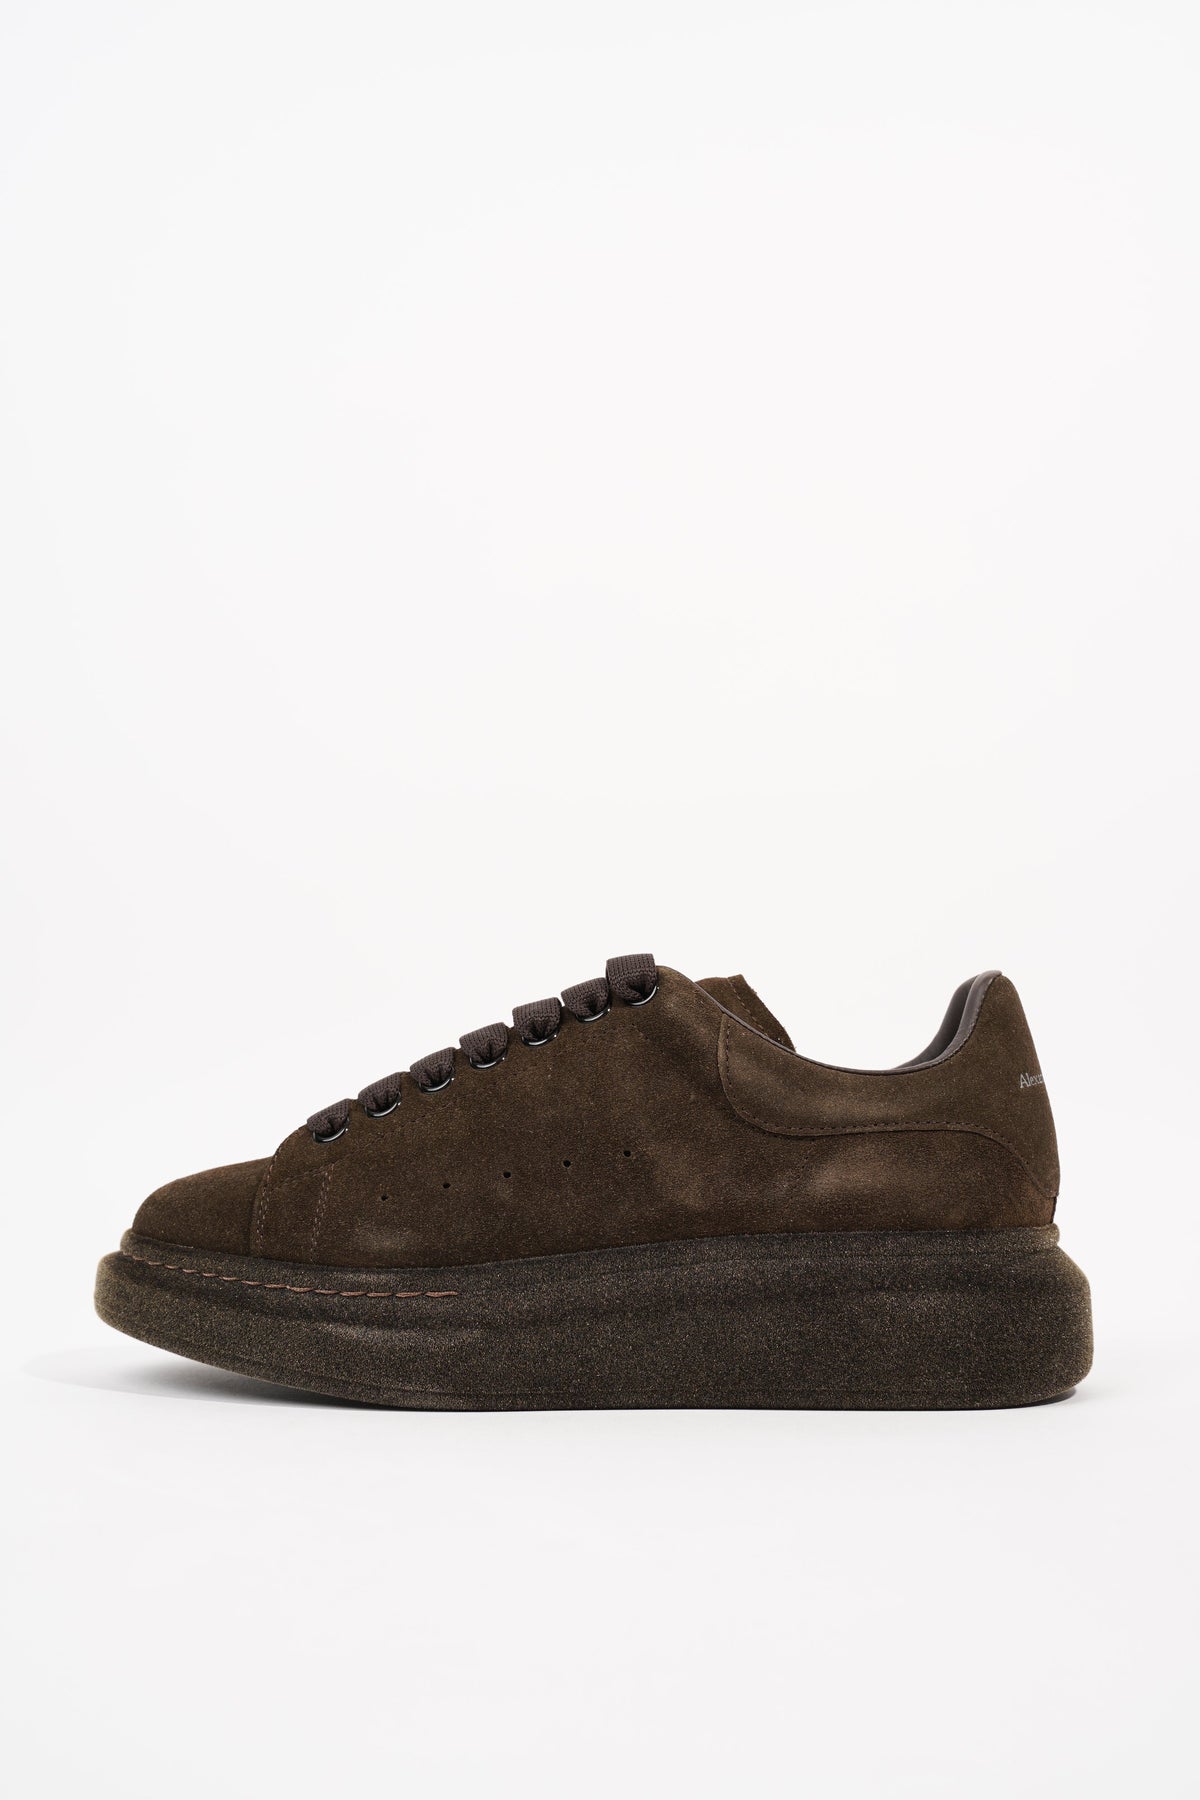 Buy Louis Vuitton Match-Up Sneaker 'Black' - 1A2R4V